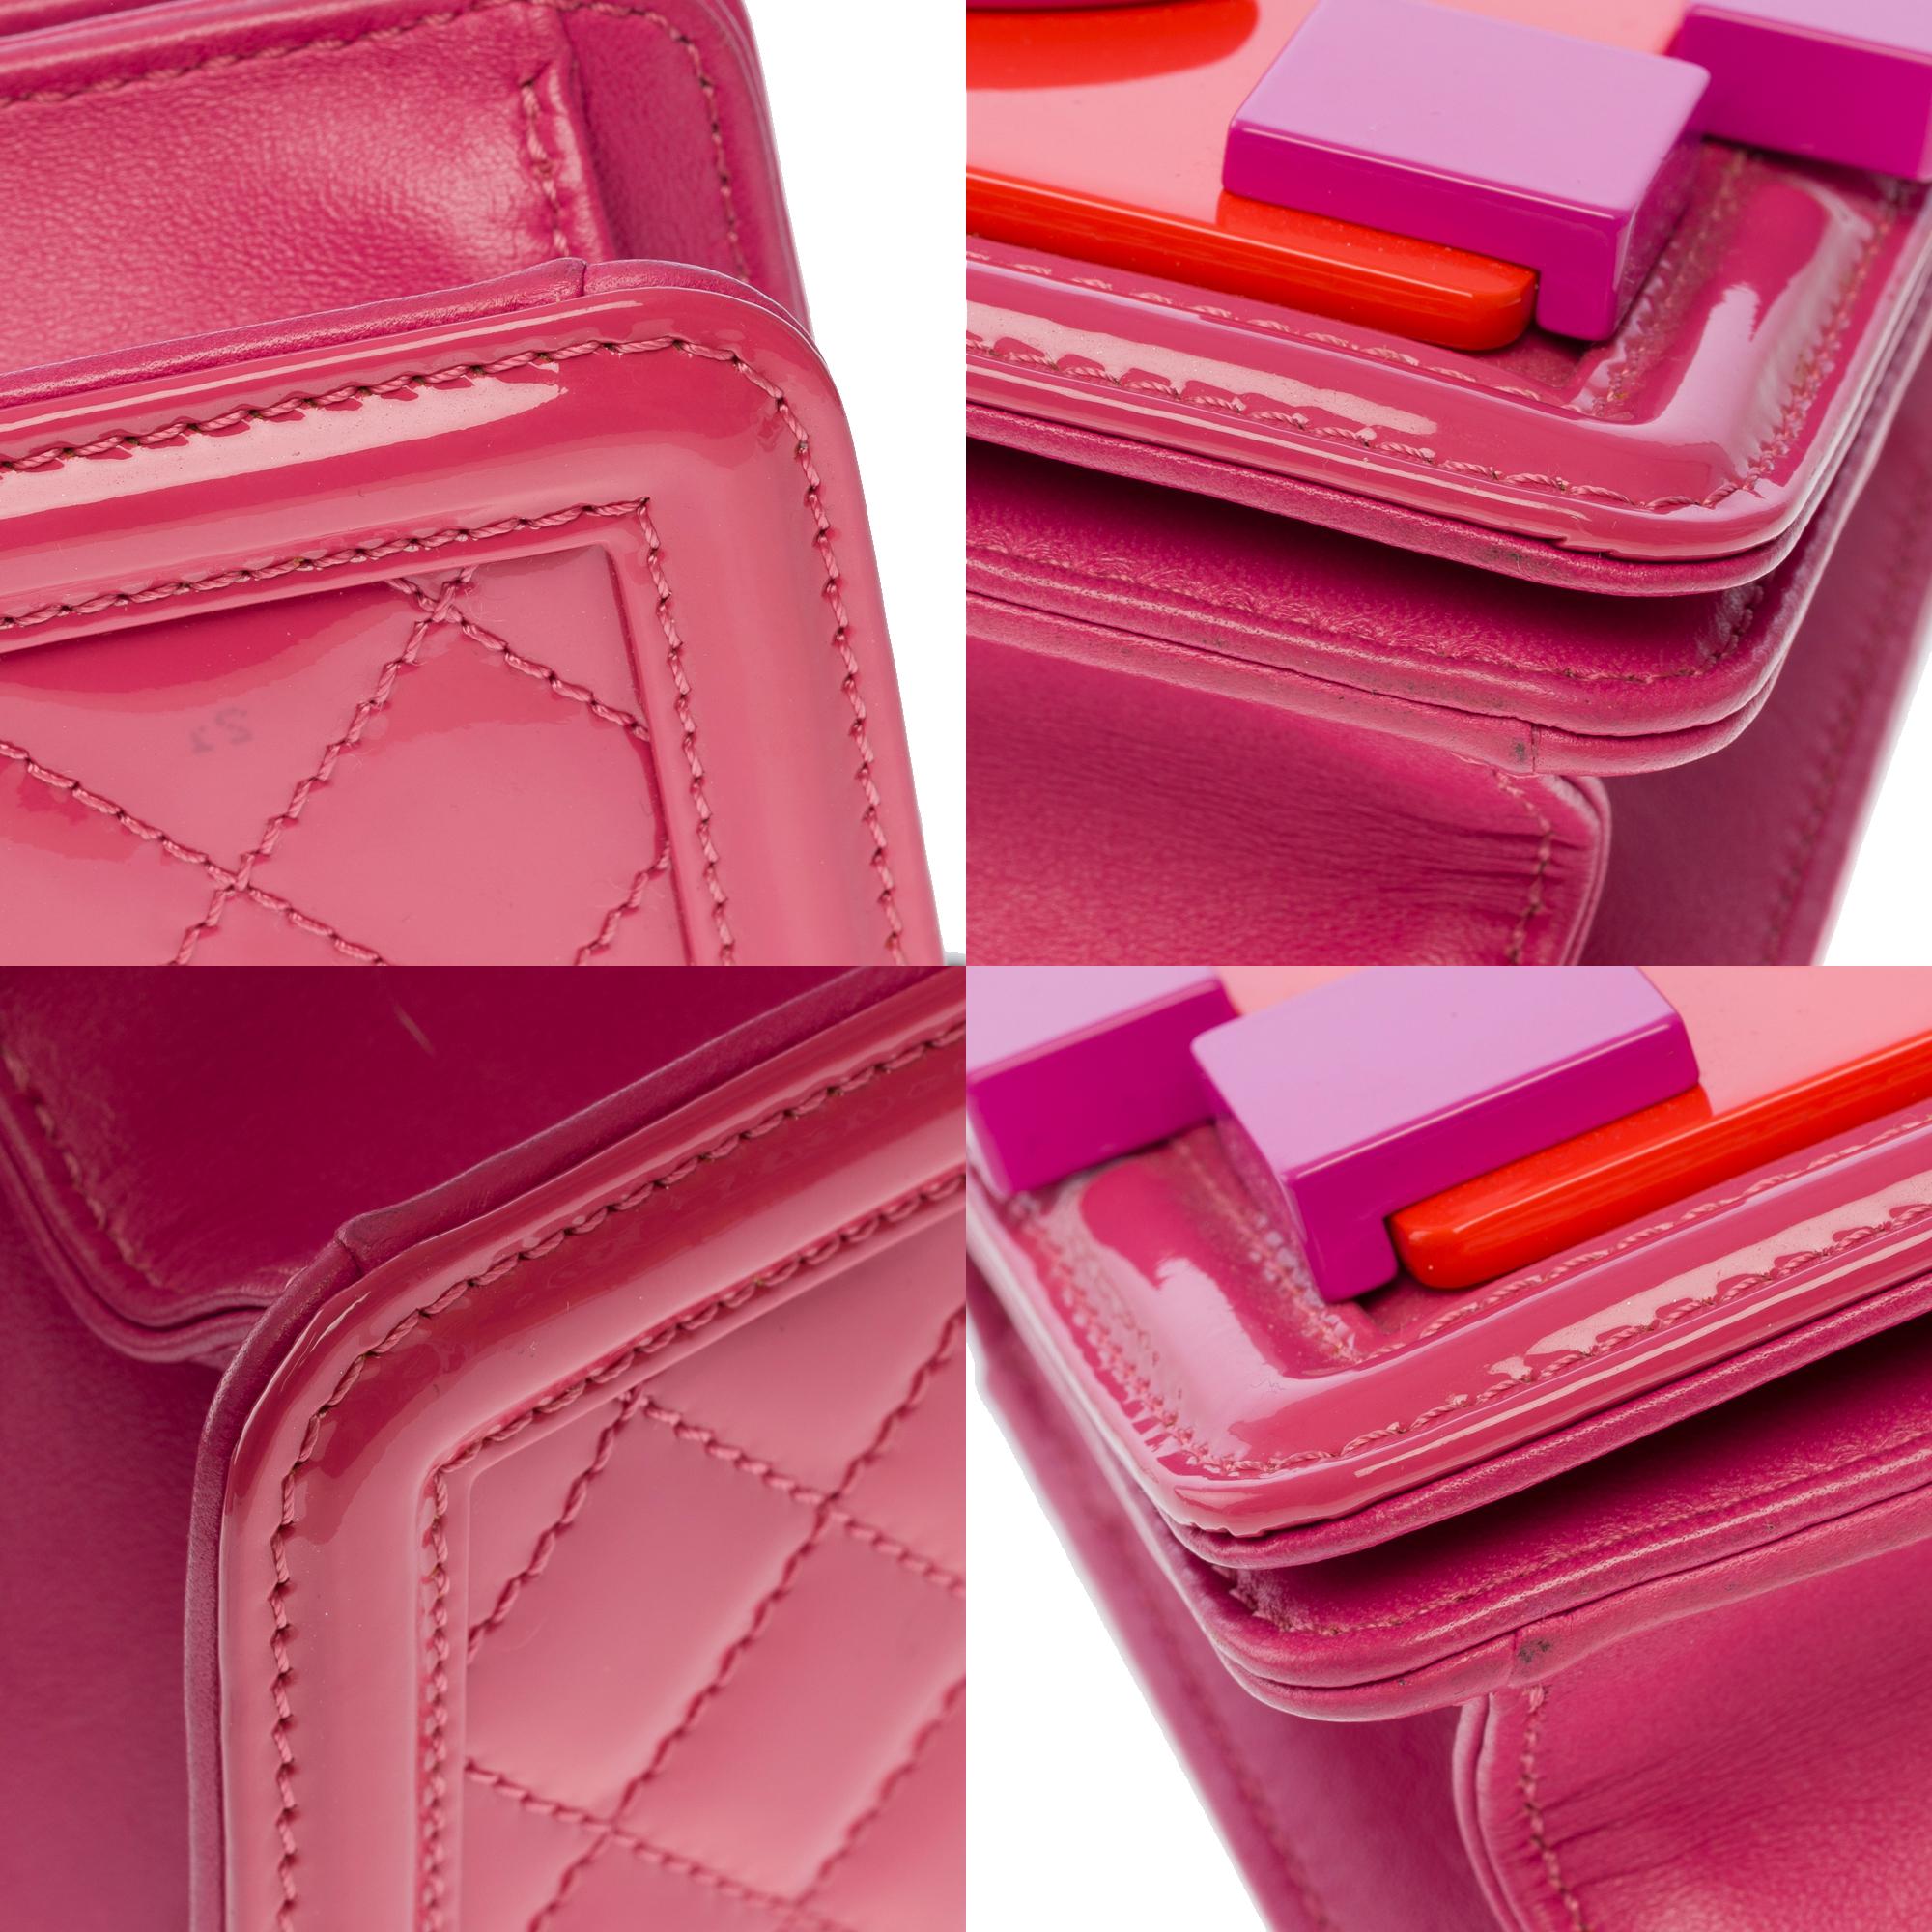 Limited edition Chanel Mini shoulder flap bag lego in Pink & Orange leather, SHW 3